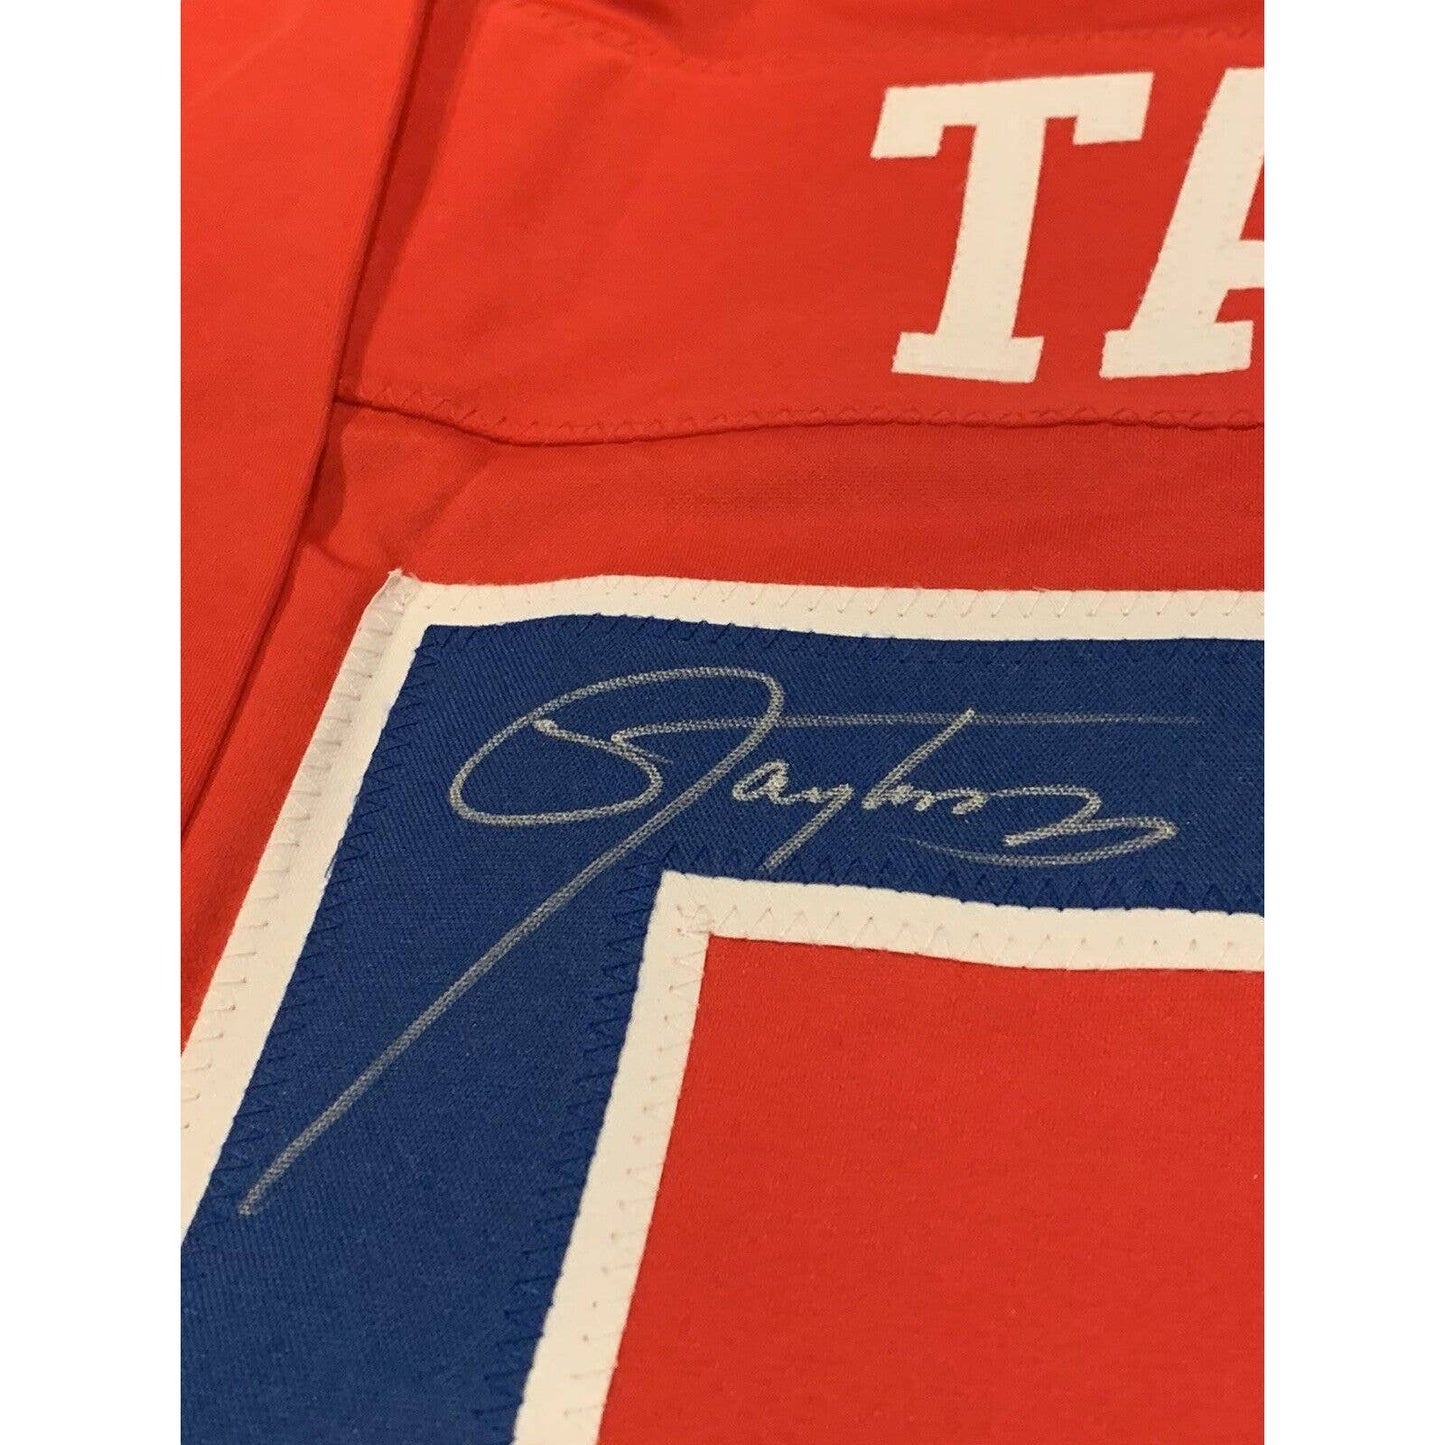 Lawrence Taylor Autographed/Signed Jersey JSA COA New York Giants Super Bowl - TreasuresEvolved